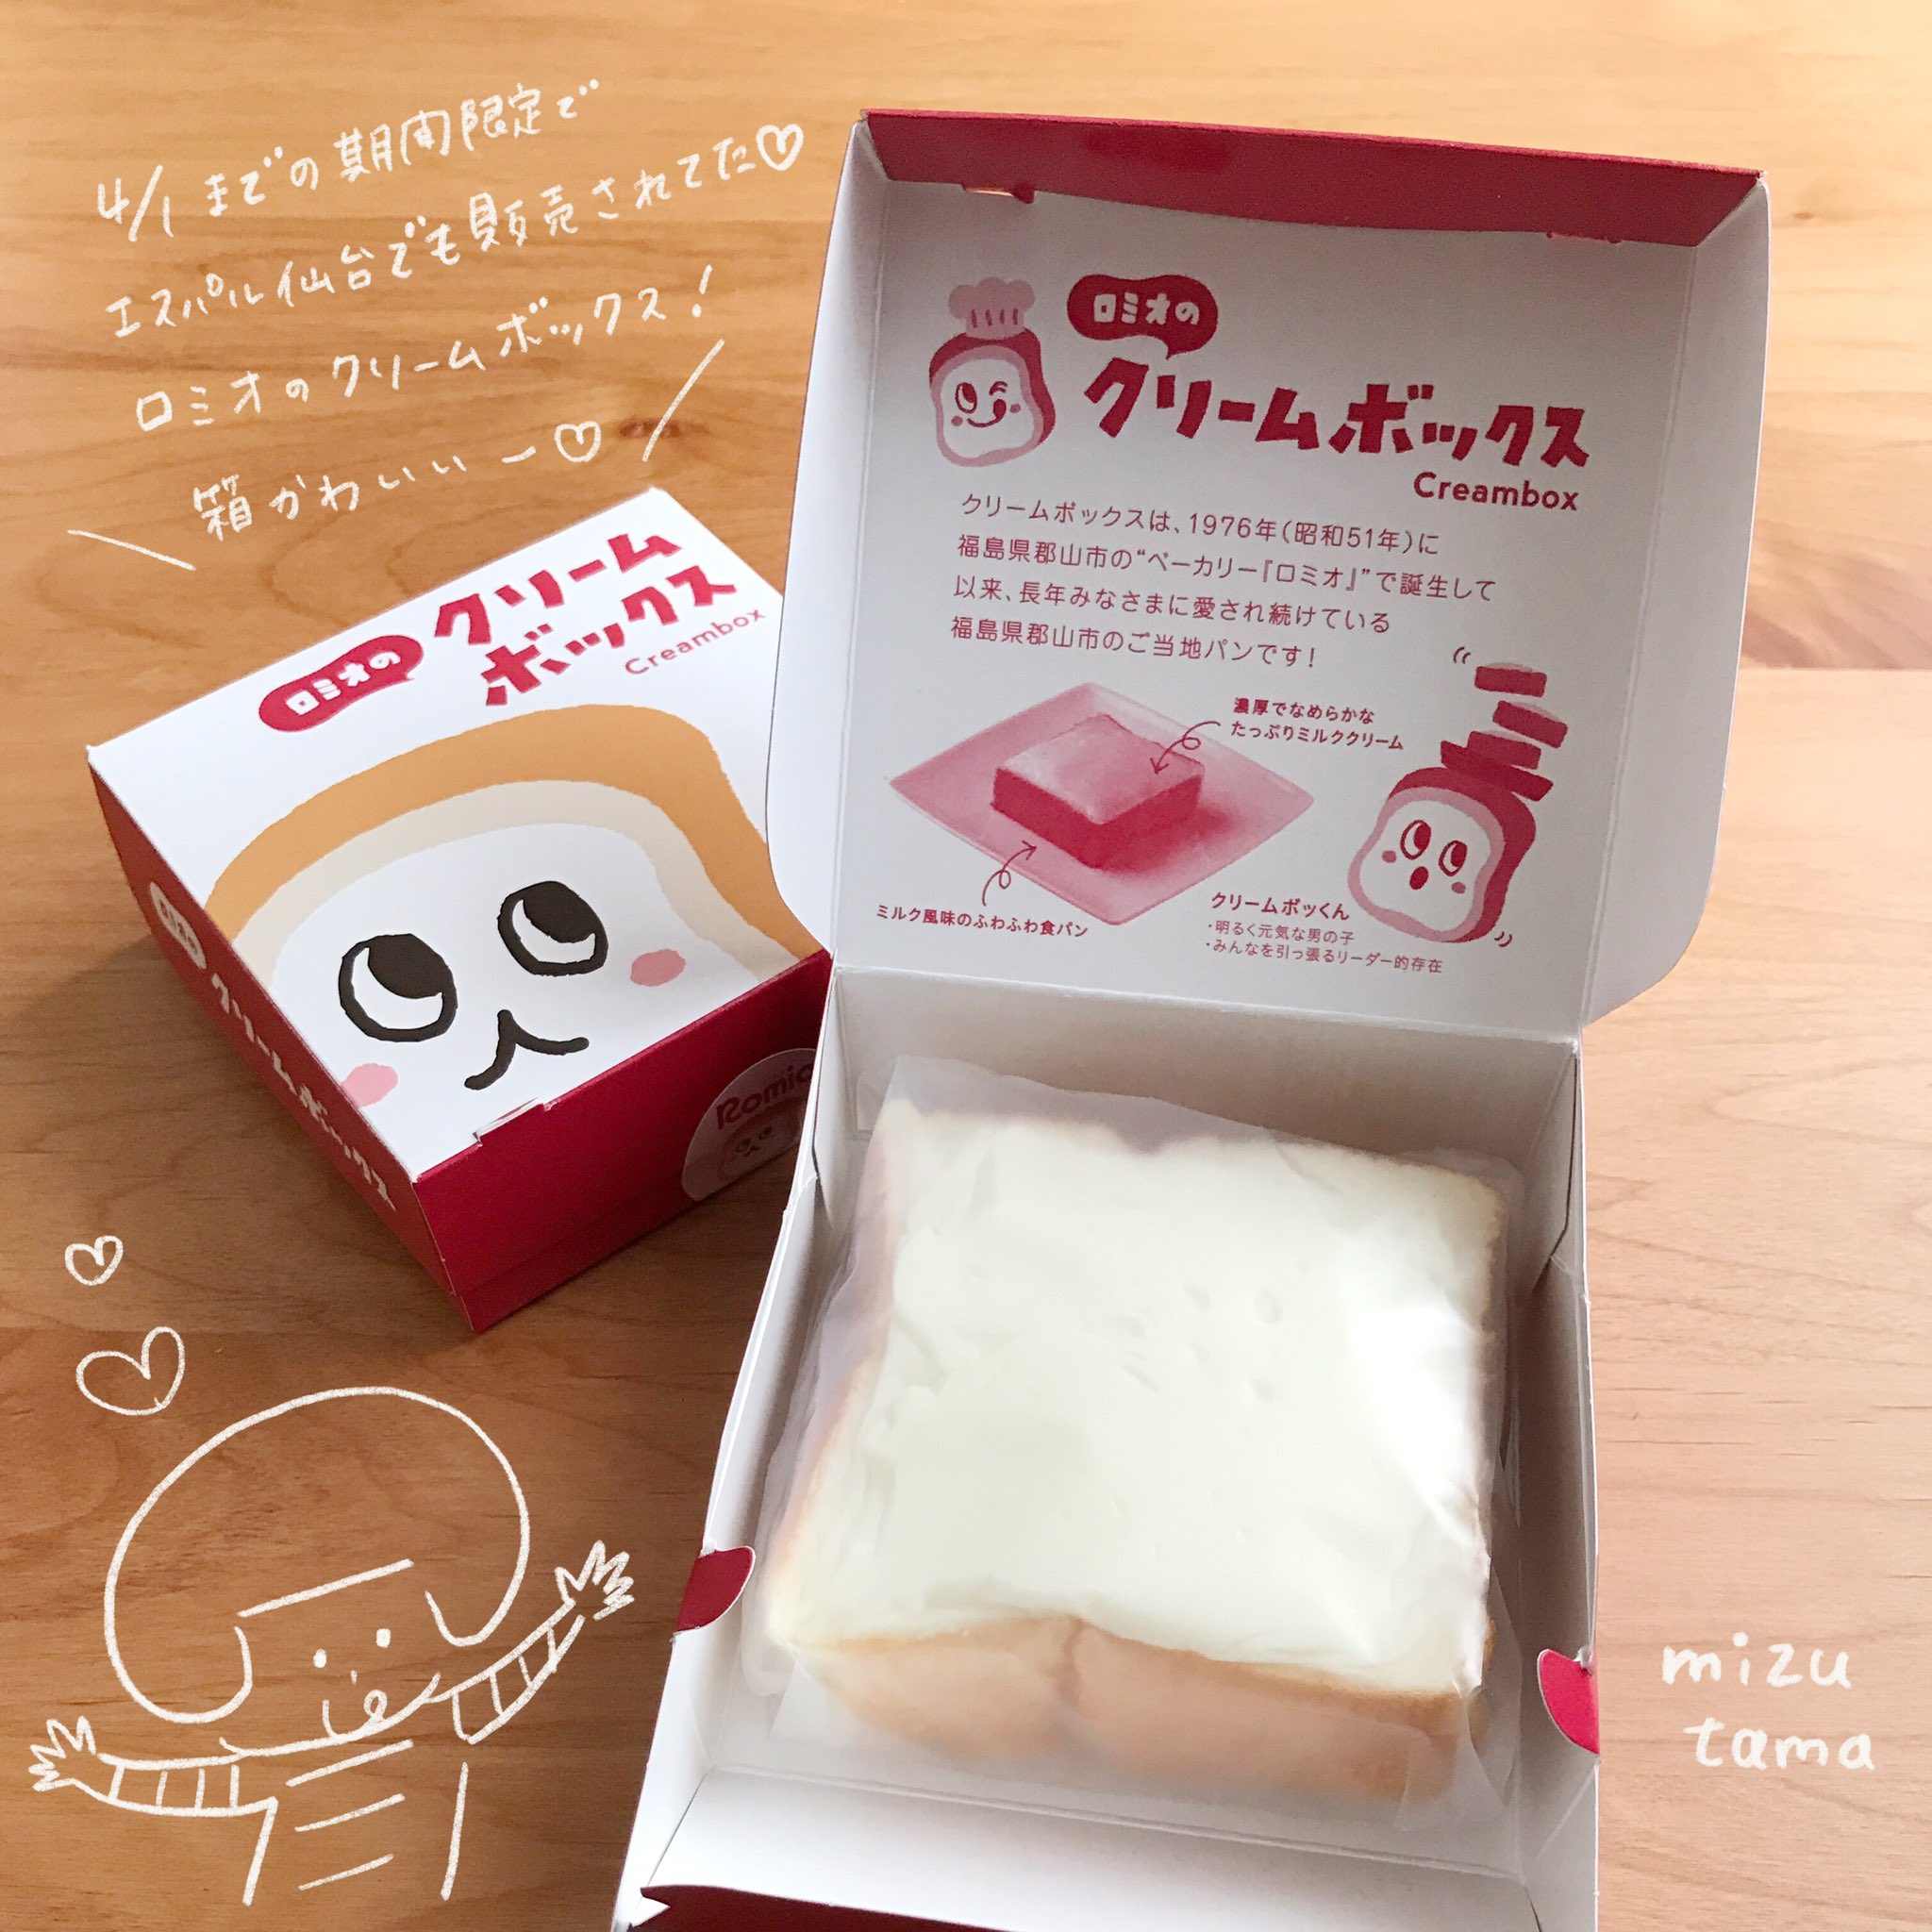 Mizutama ロミオのクリームボックス うまっ わたしの食べたことのある コンビニのクリームボックスとは全然違った T Co K4rk7v2ace Twitter